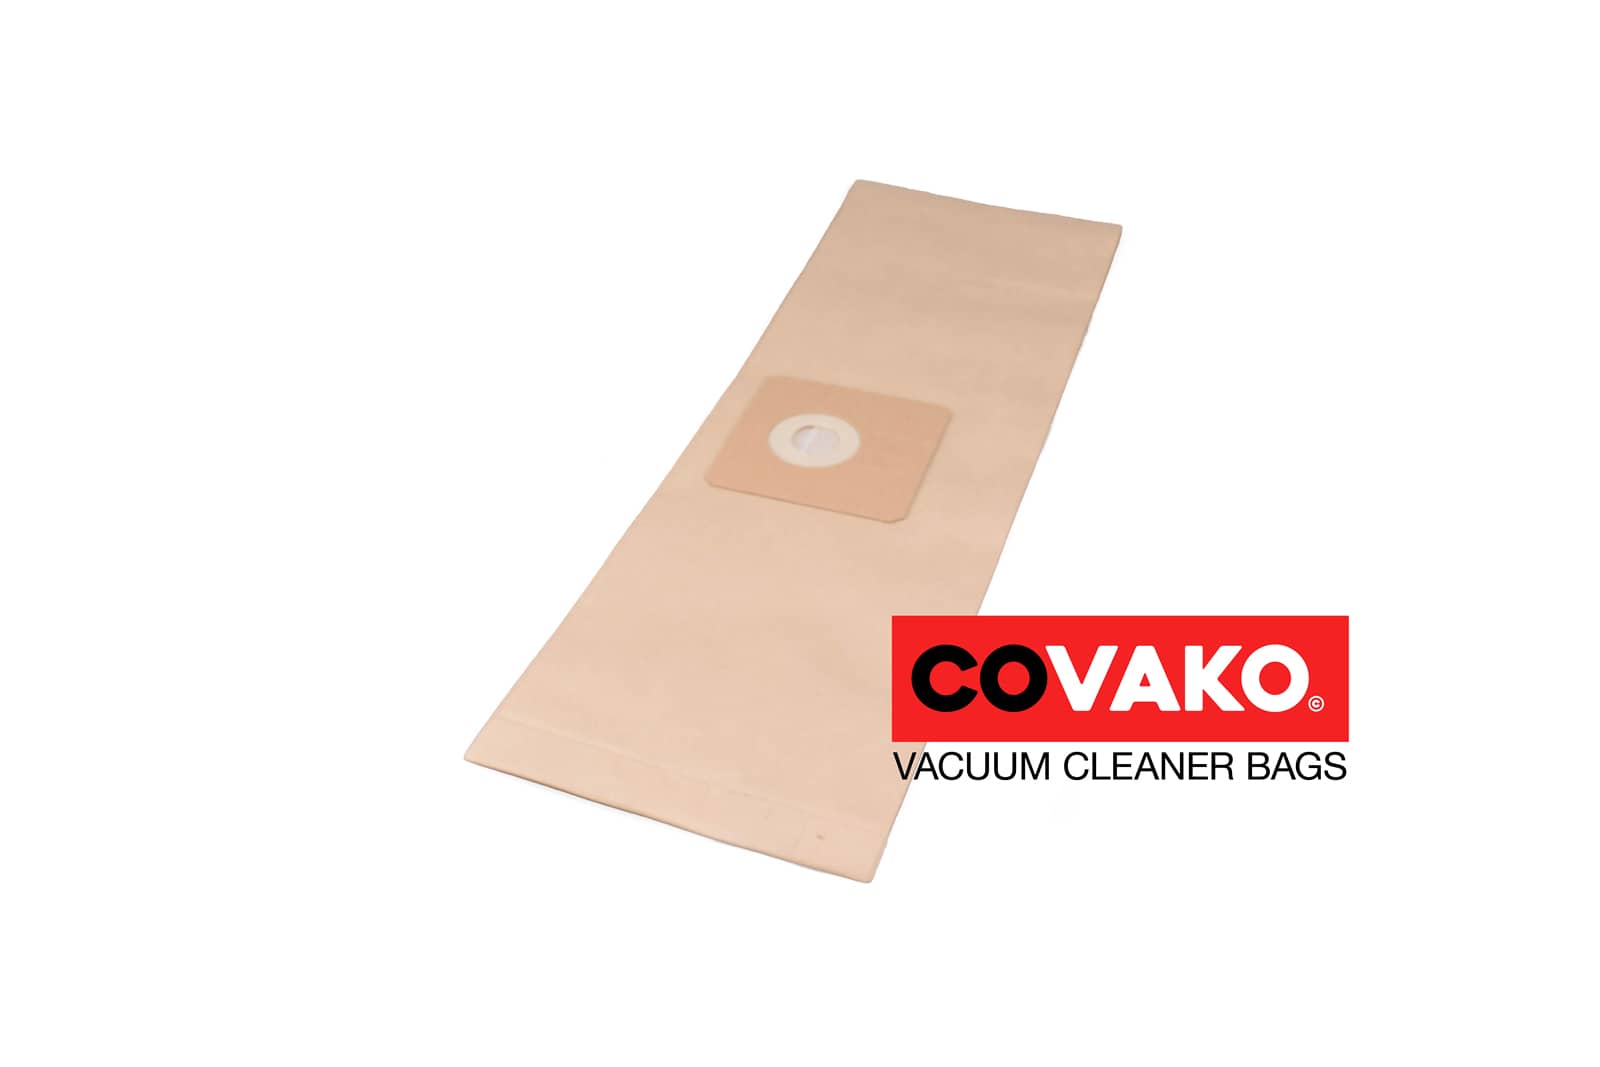 TMB Piccolo Silenzio  / Paper - TMB vacuum cleaner bags